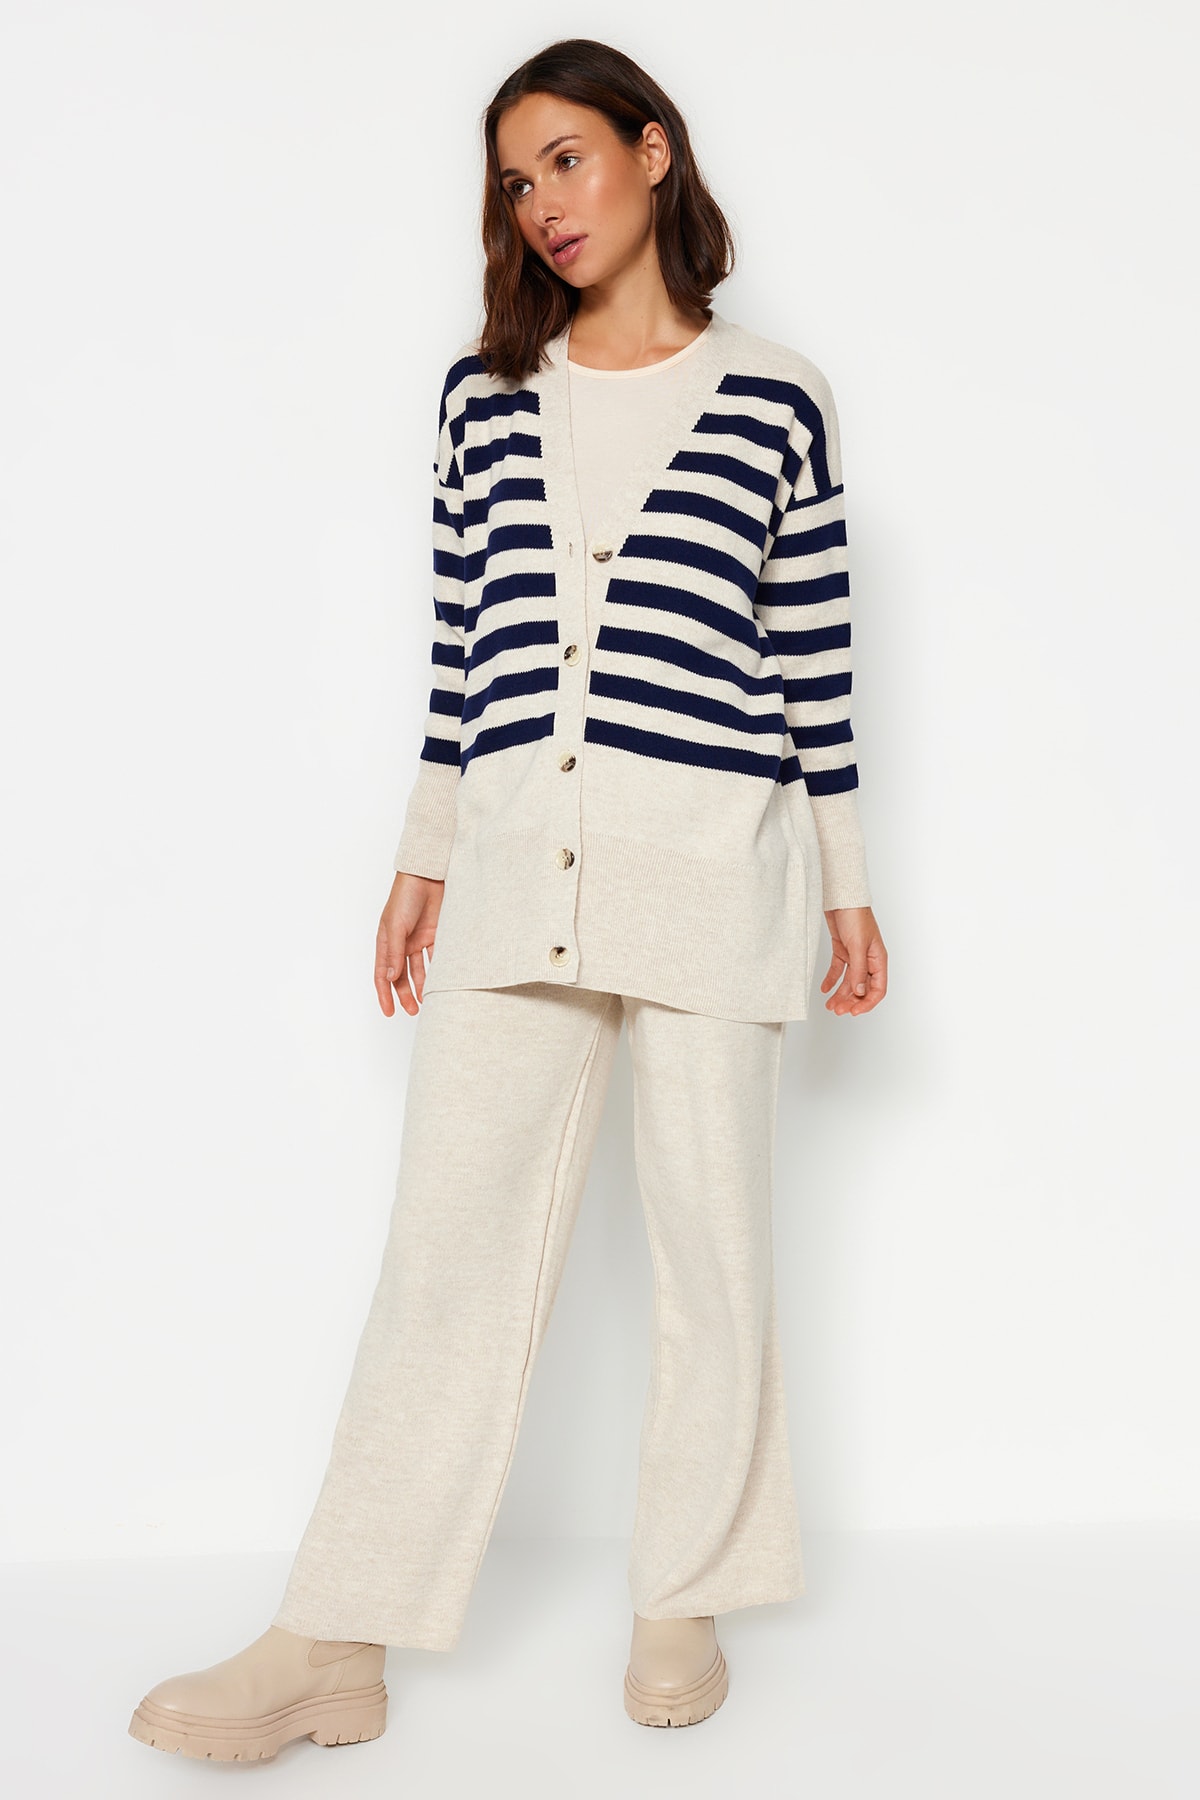 Trendyol Beige Button Detailed Jacquard Striped Cardigan Trousers Knitwear Two Piece Set